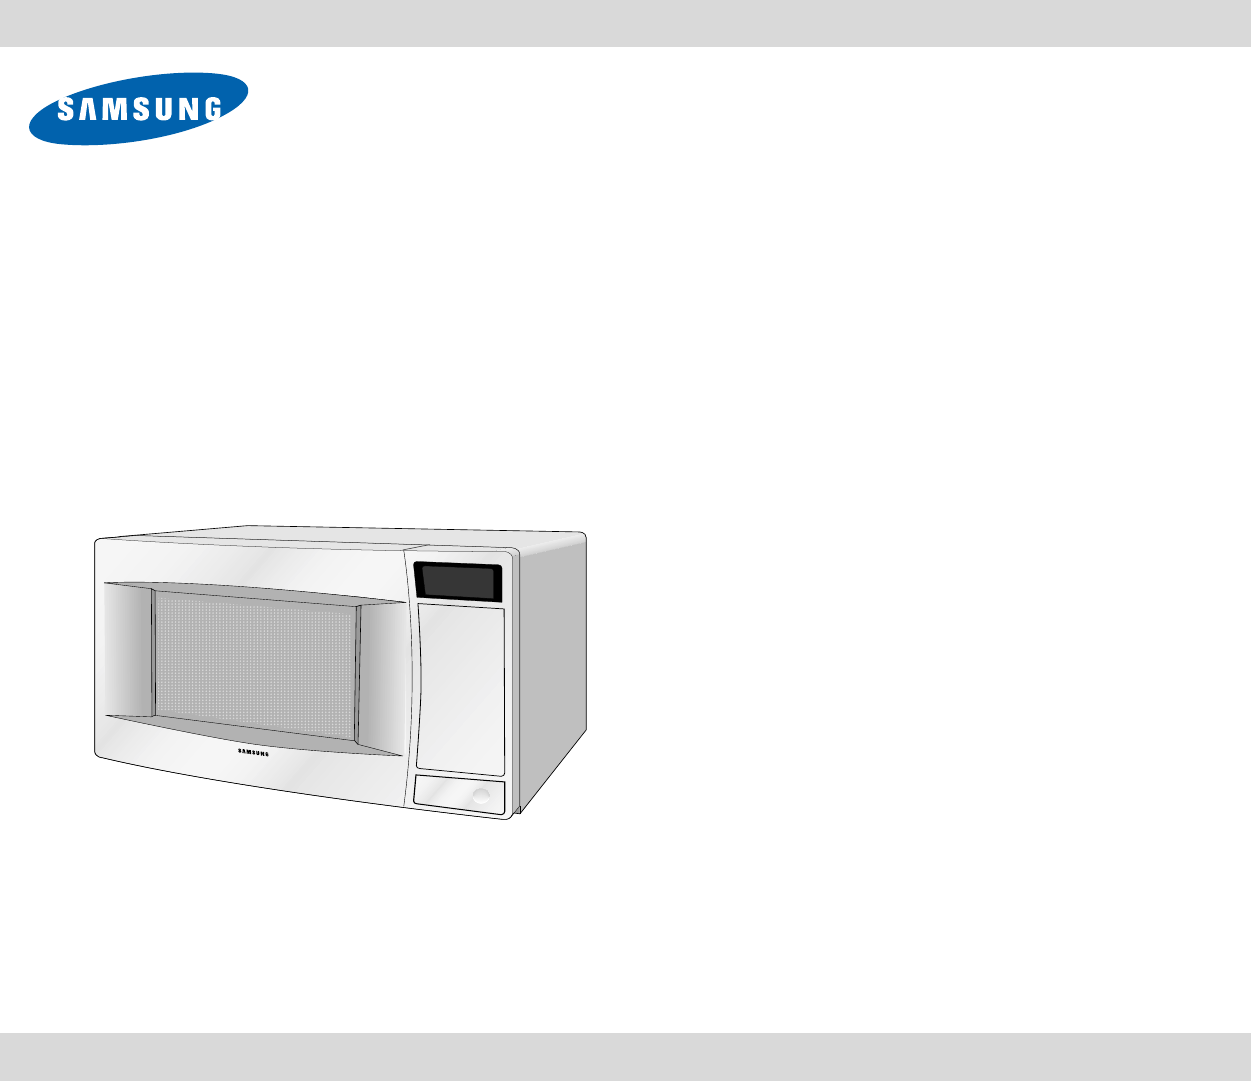 Solwave Ameri-Series Heavy-Duty Commercial Steamer Microwave Oven -  208/240V, 2,200W